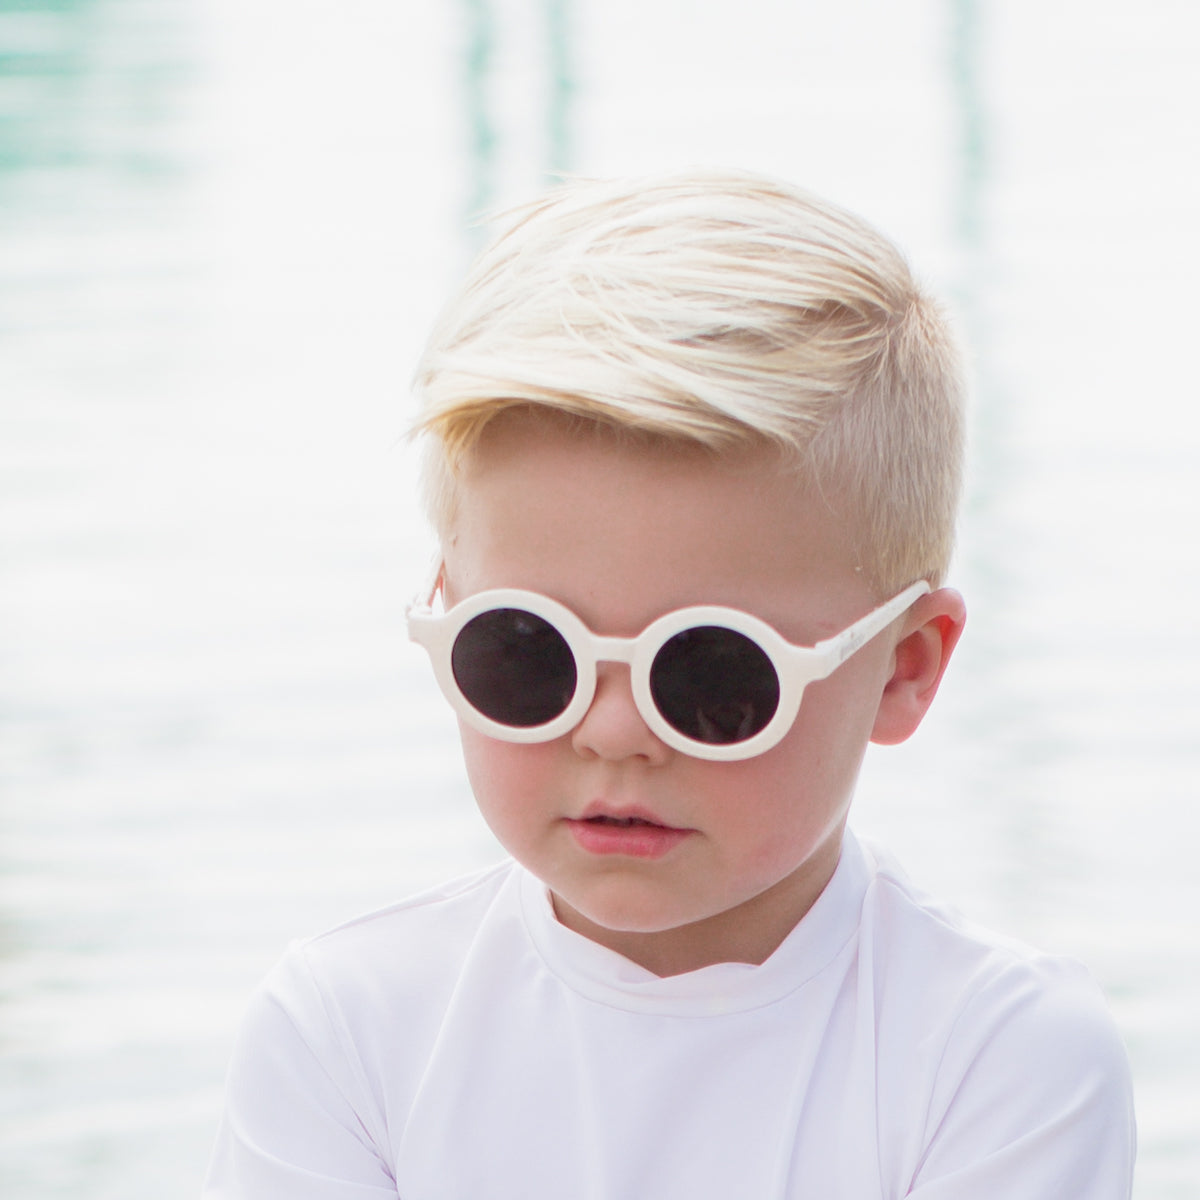 New Flexible, Resistant & Polarized UV 400 Kids Sunglasses Black